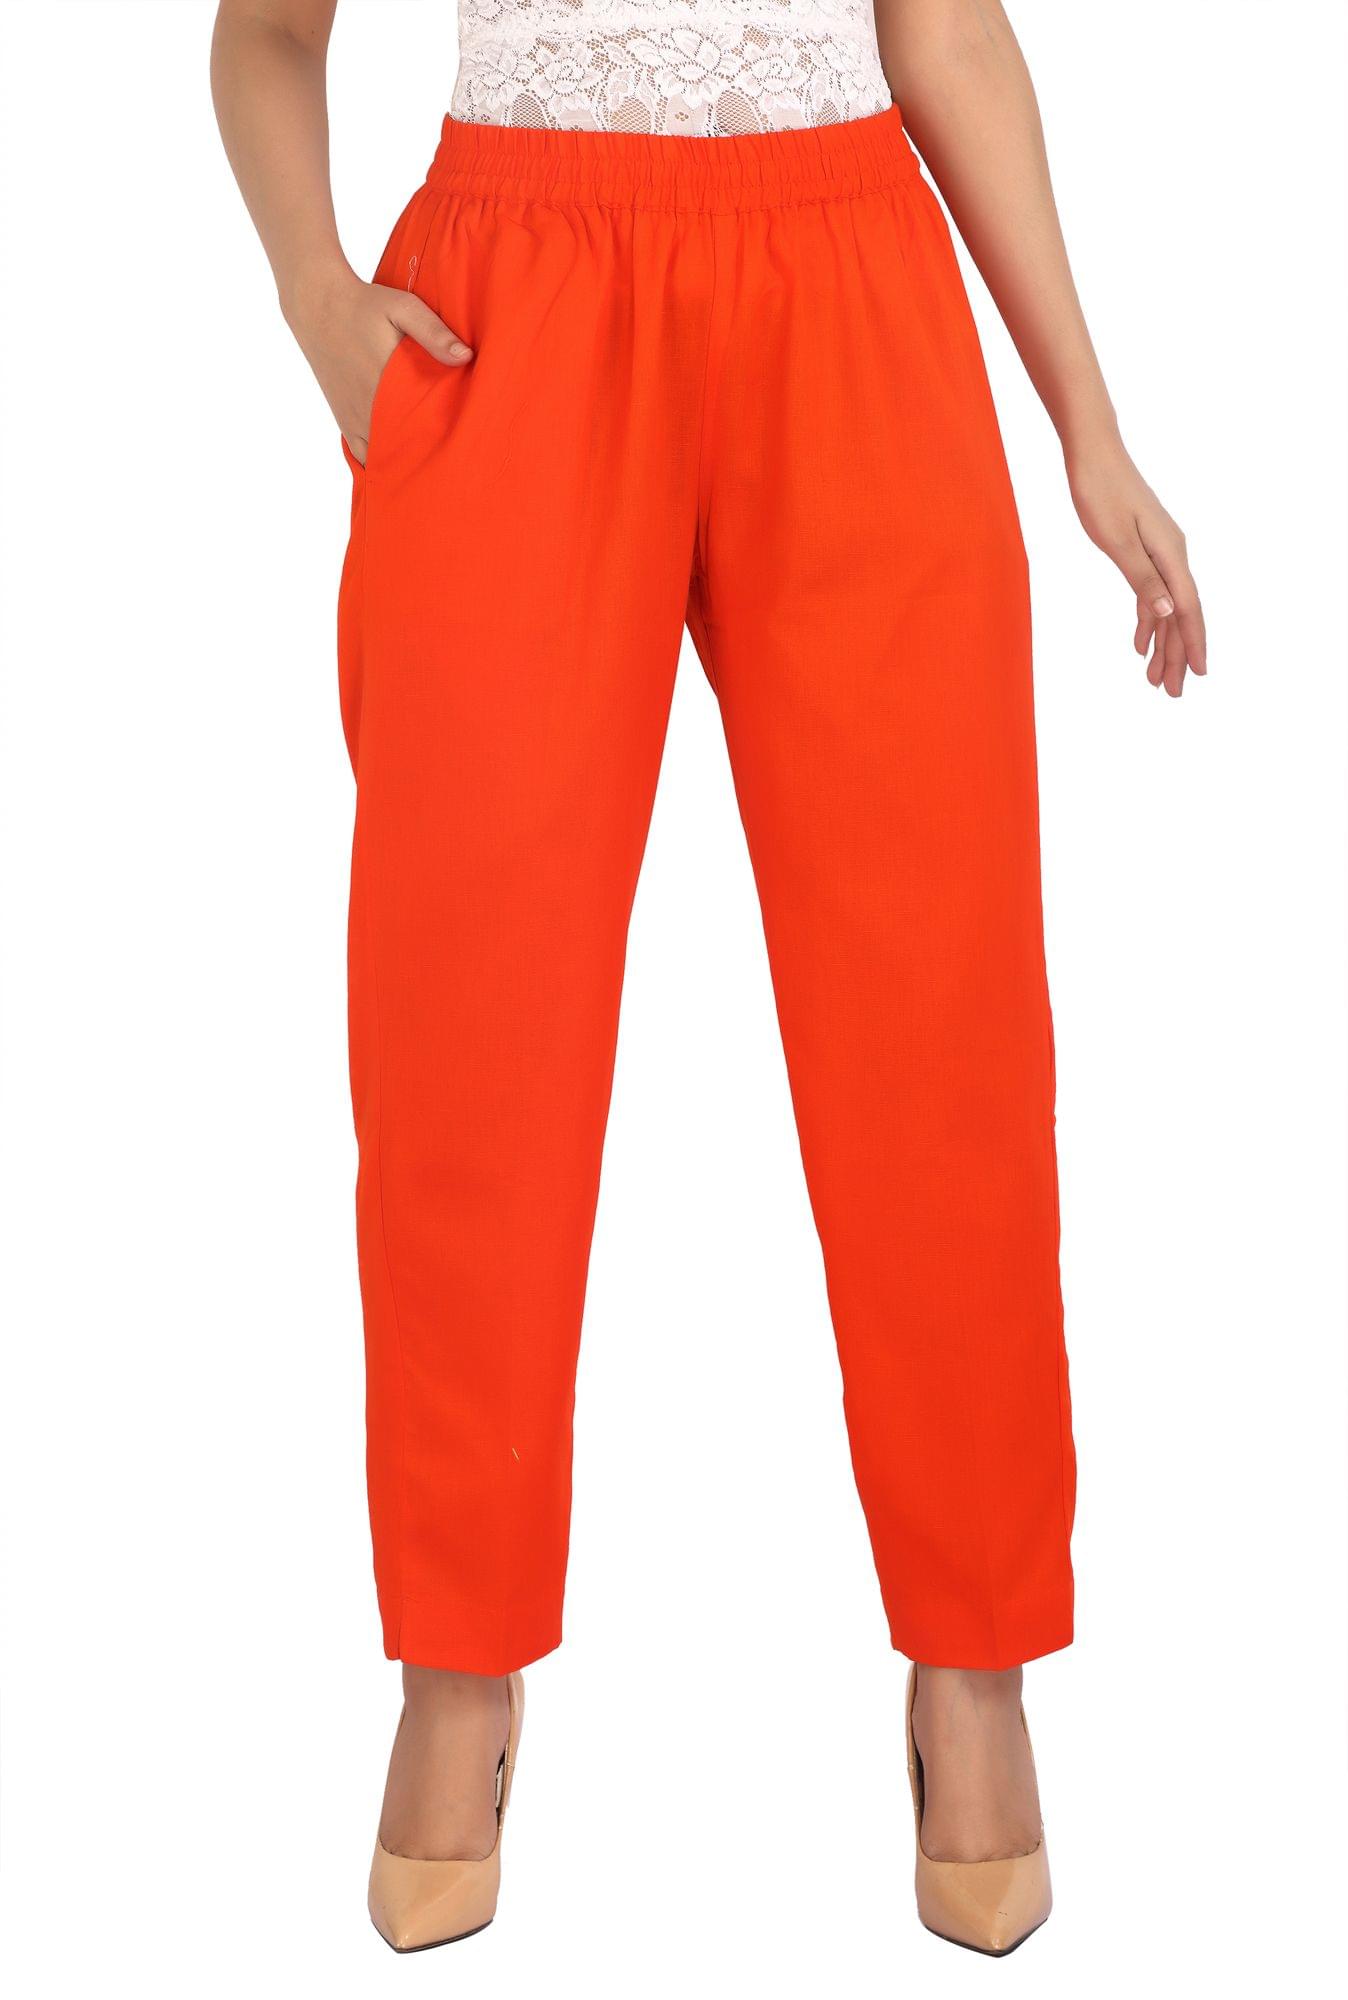 Women's Orange Cotton Pant